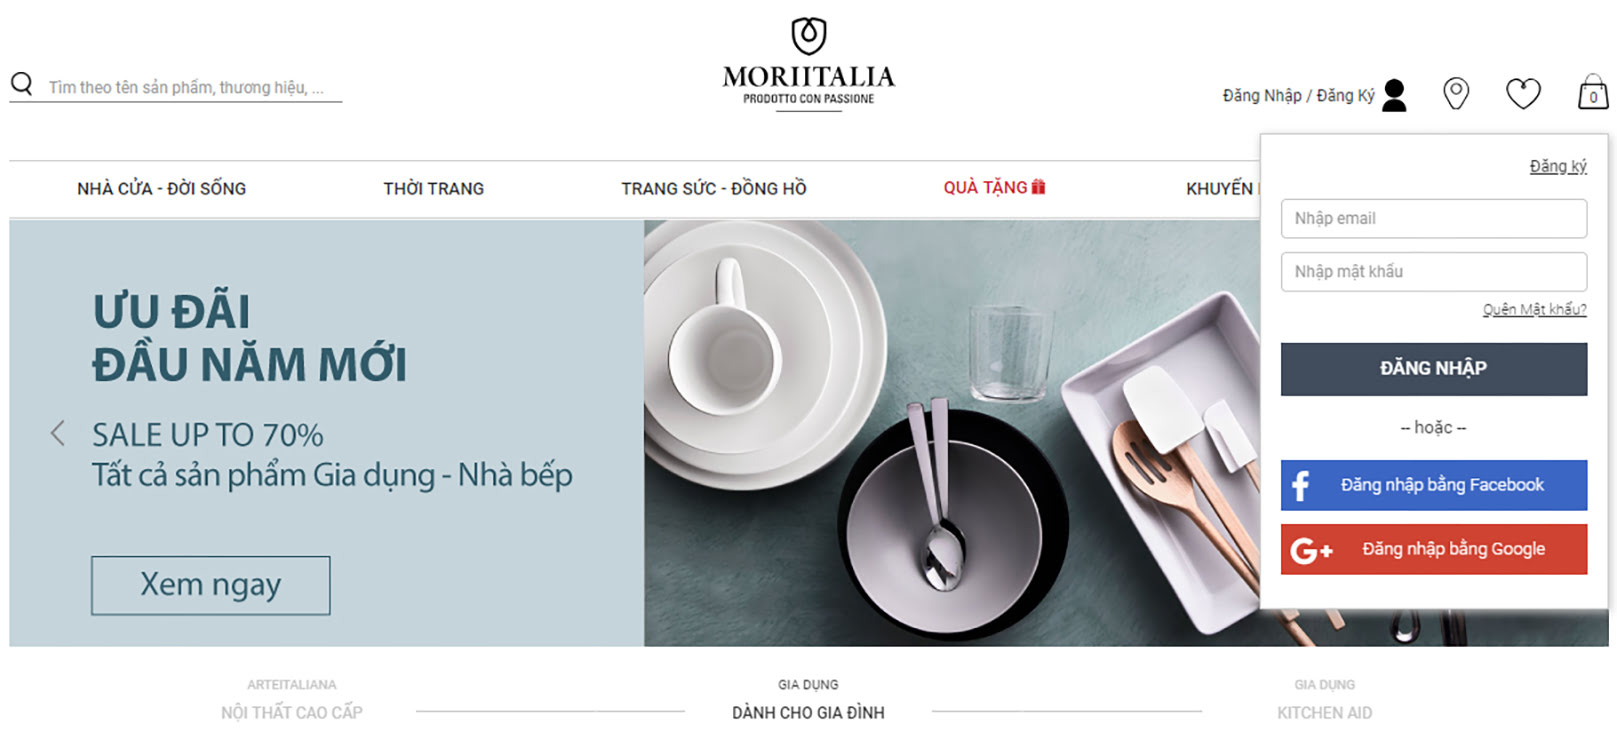 Moriitalia Homepage